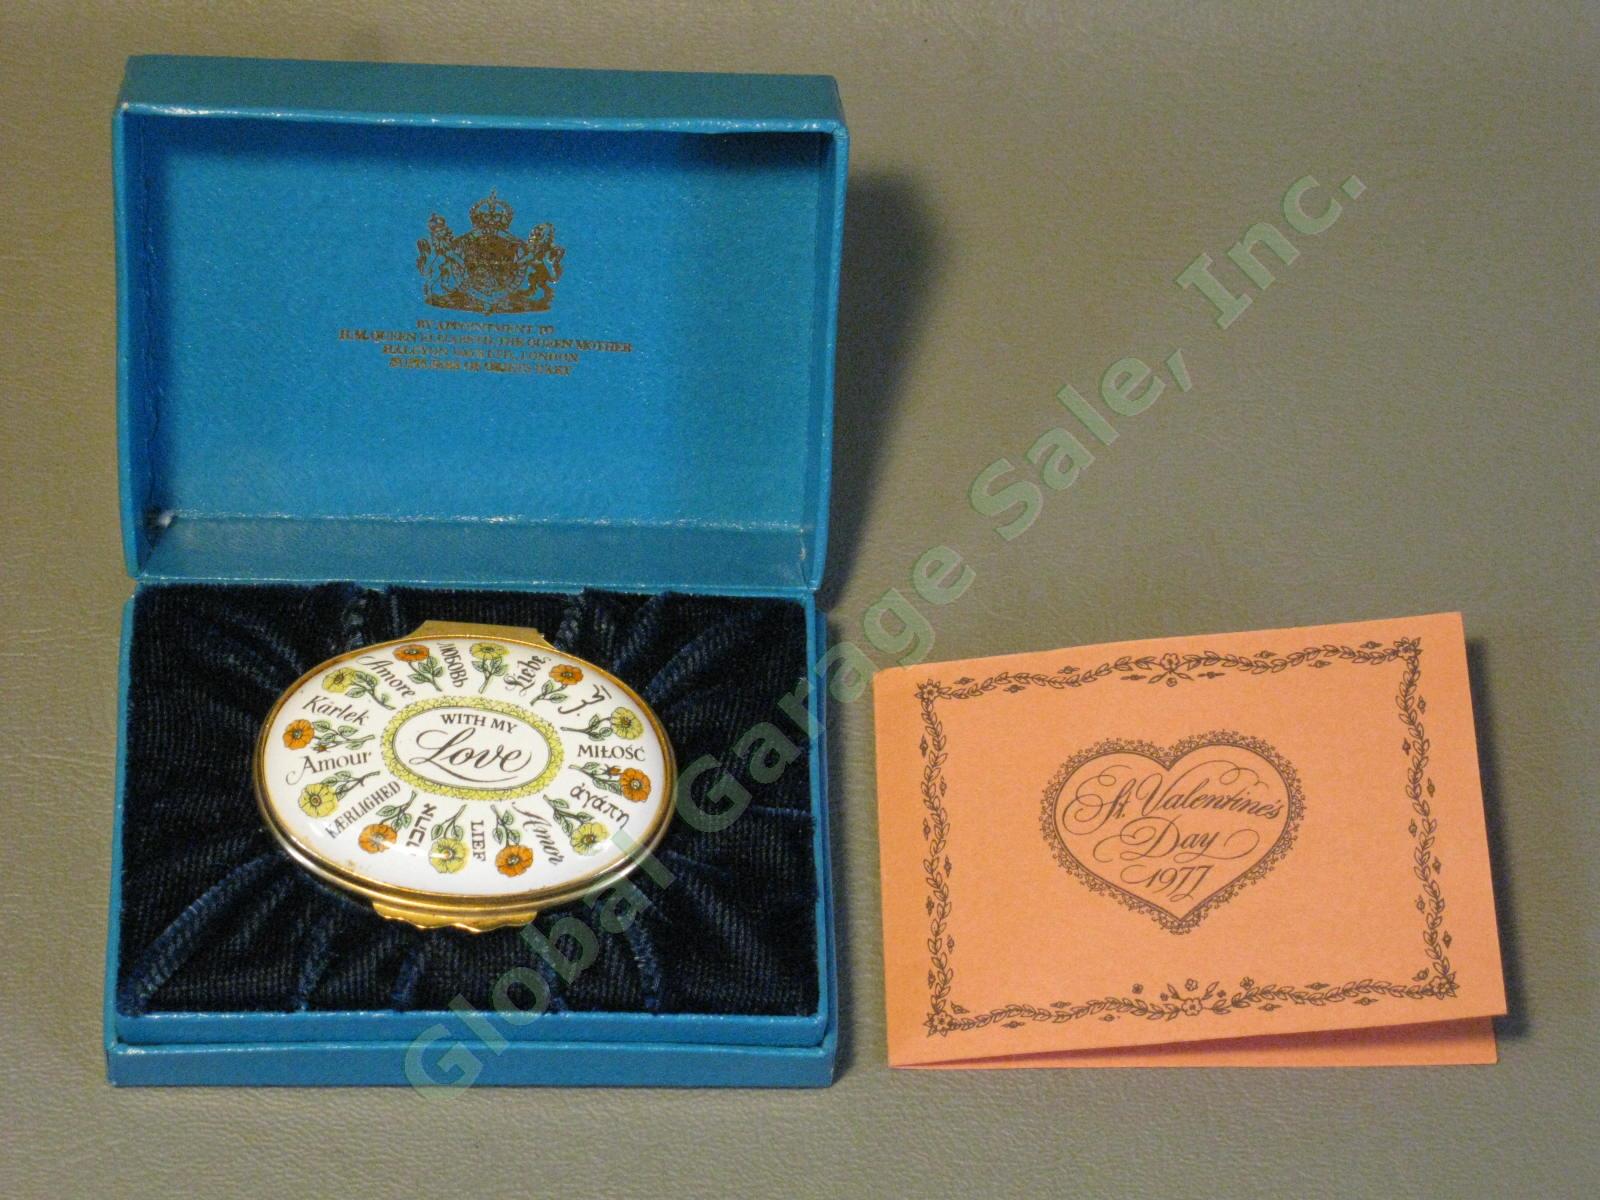 Bilston & Battersea 1977 Halcyon Days Valentines With My Love Enamel Trinket Box 7